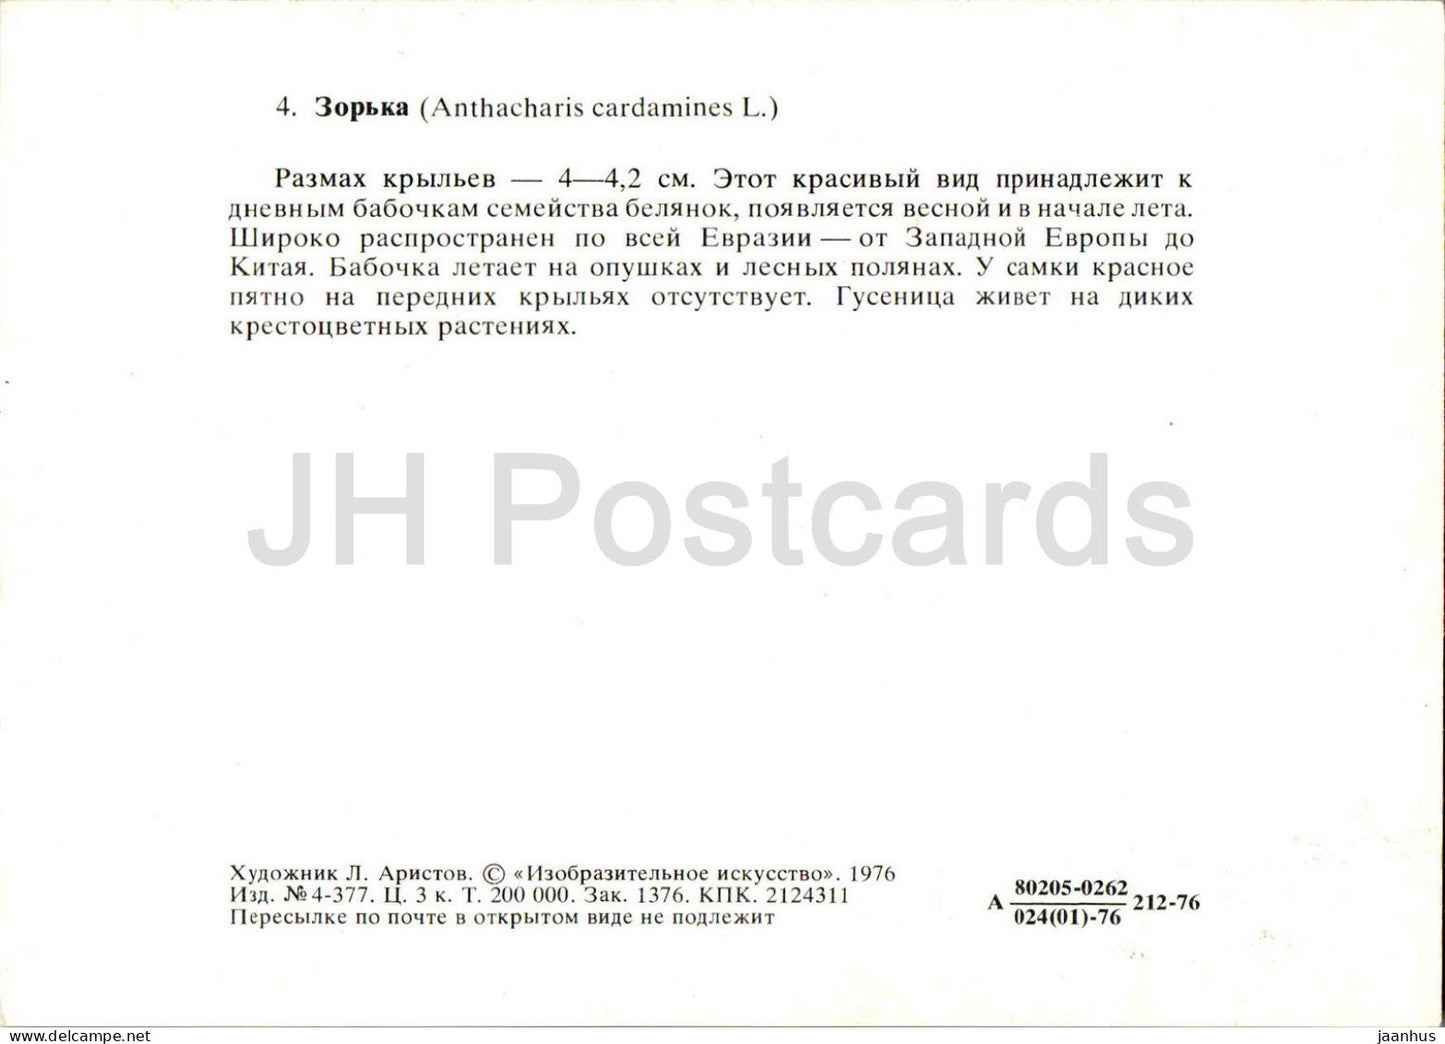 Pointe orange - Anthocharis cardamines - papillon - papillons - 1976 - Russie URSS - inutilisé 